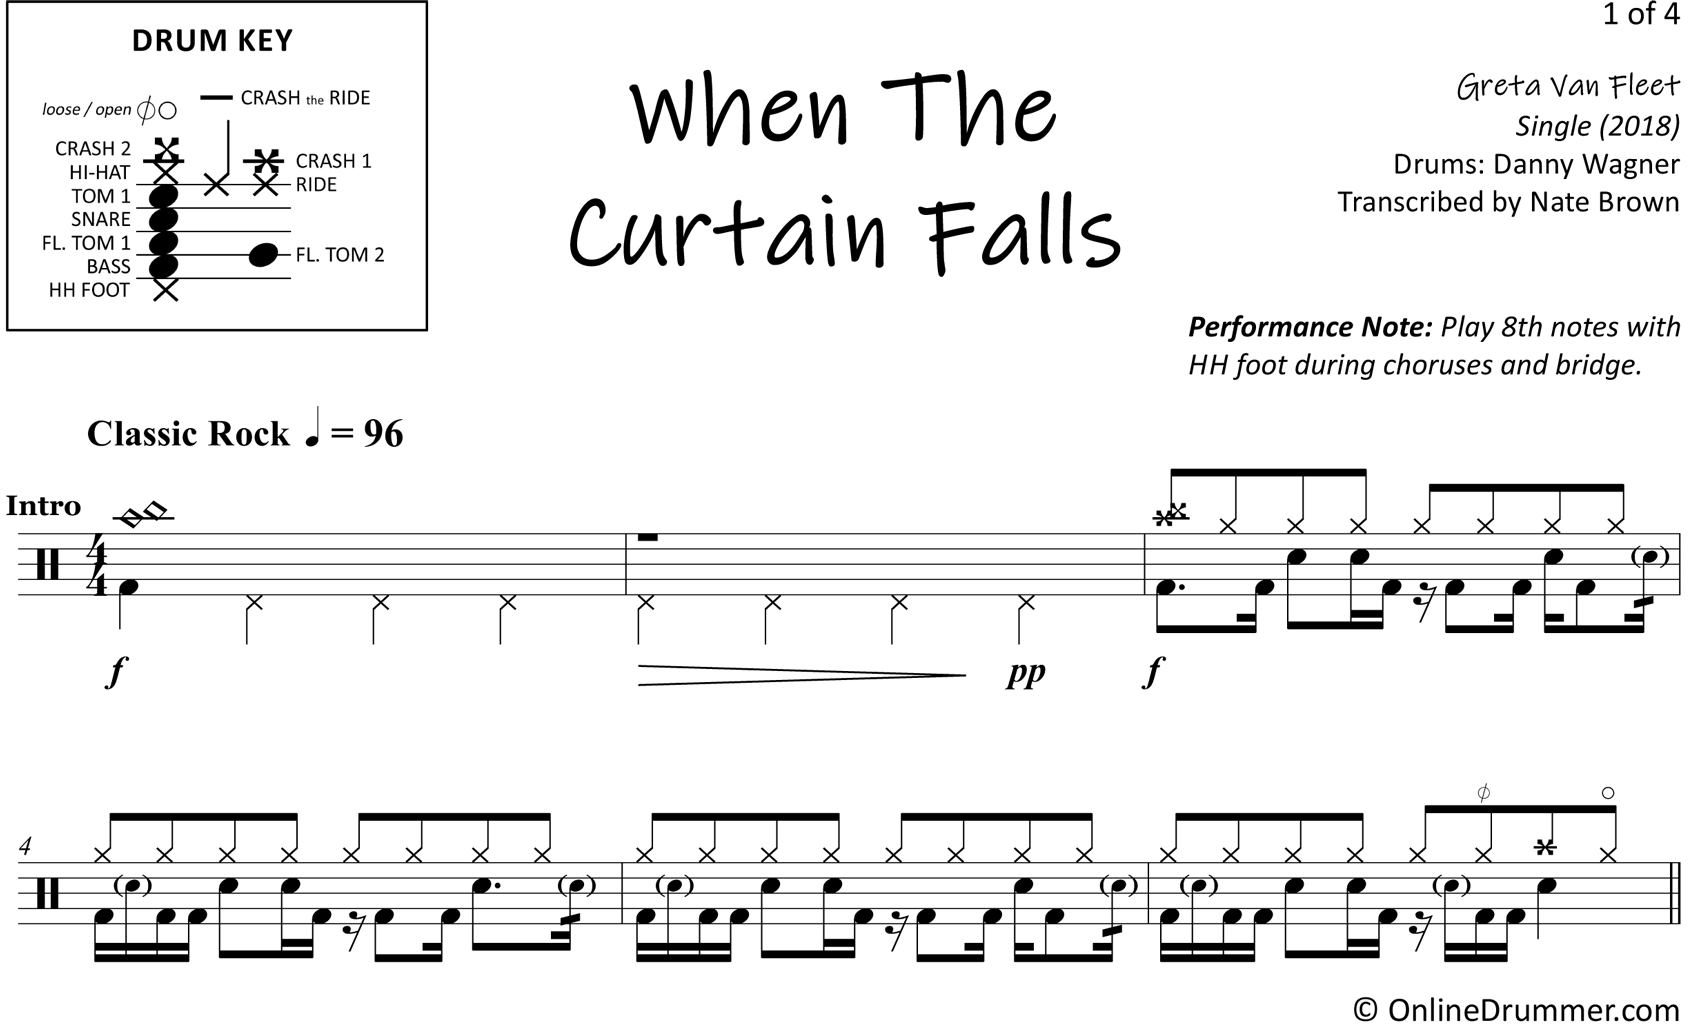 When The Curtain Falls - Greta Van Fleet - Drum Sheet Music